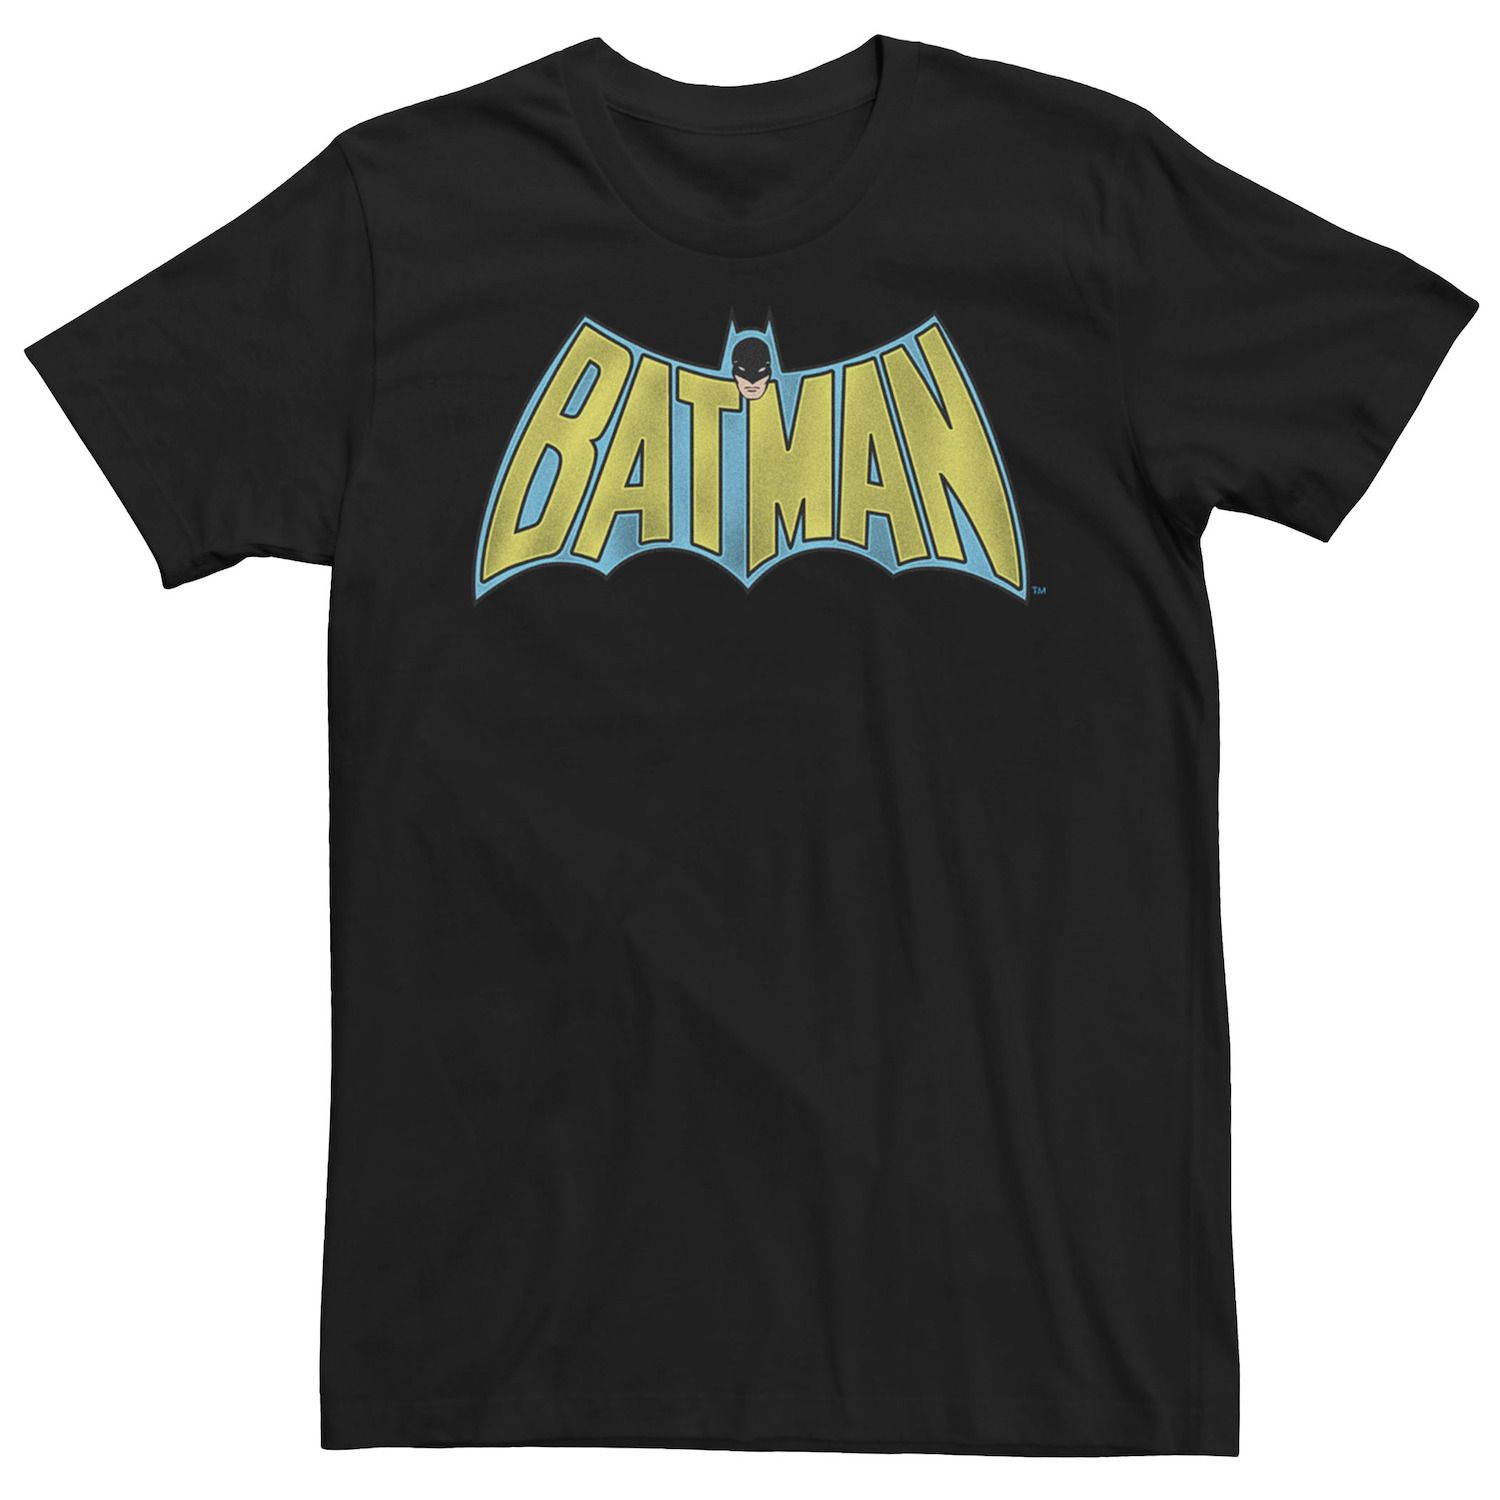 Мужская винтажная футболка с логотипом комиксов Бэтмена Licensed Character